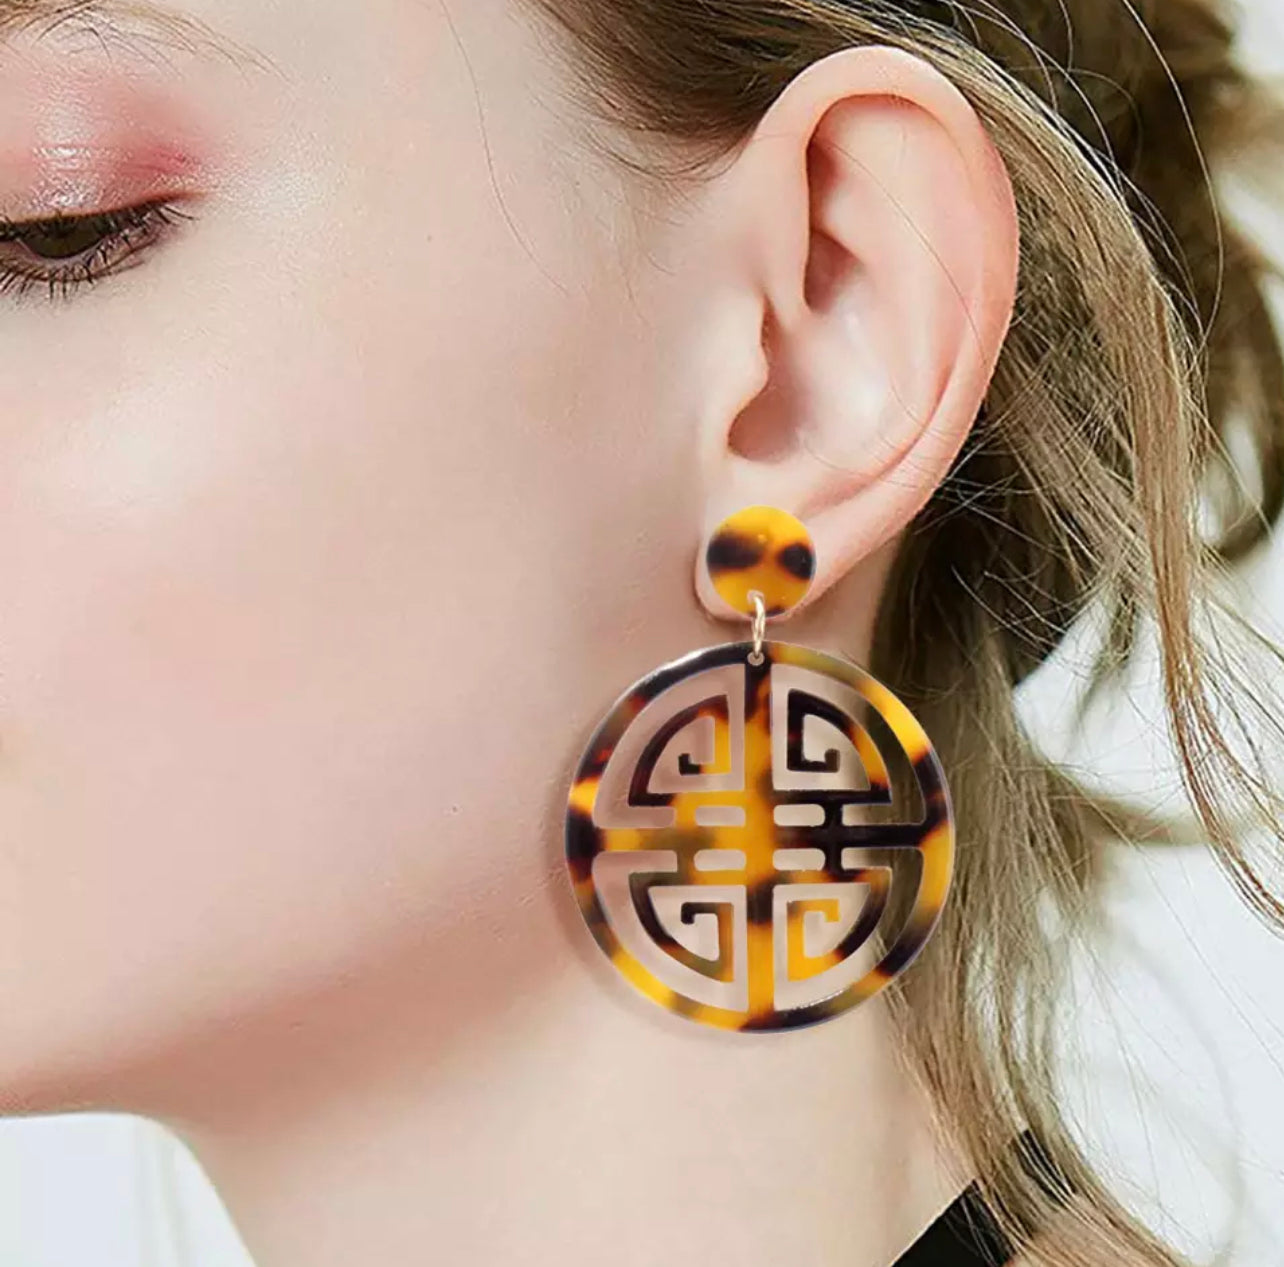 Erika Williner Designs - Charlotte Earrings